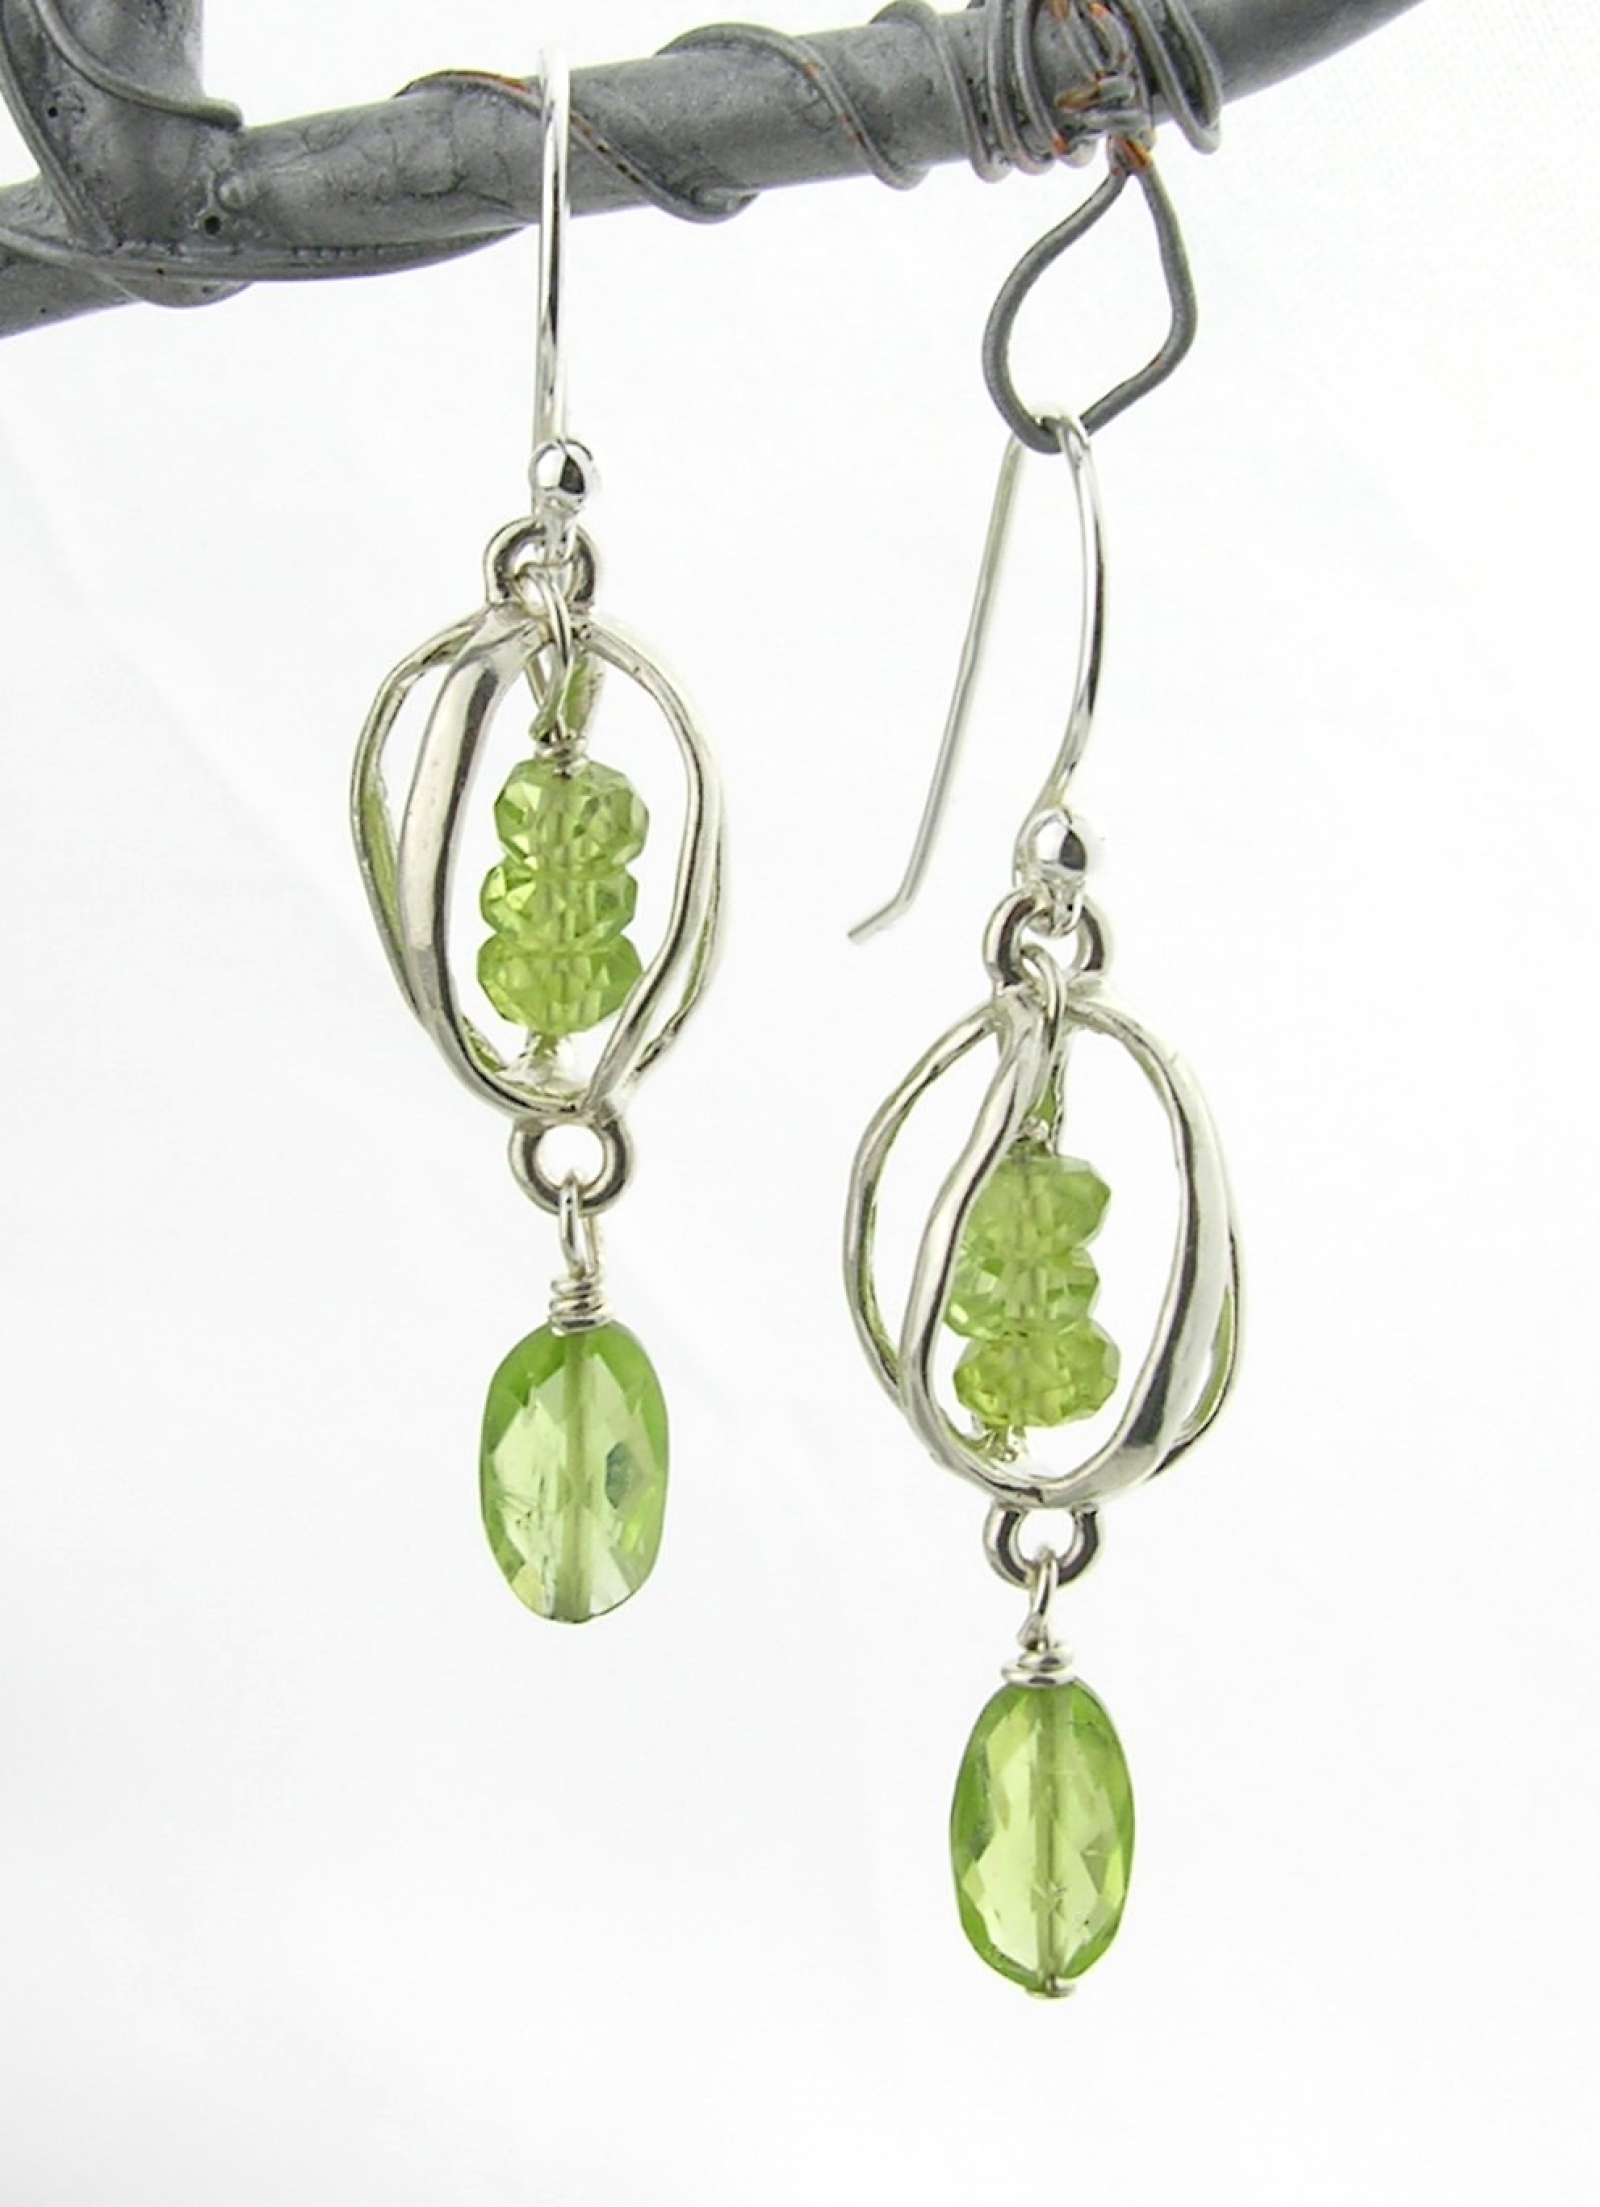 Caged Peridot Earrings - green lime handmade gemstone artisan srajd ...